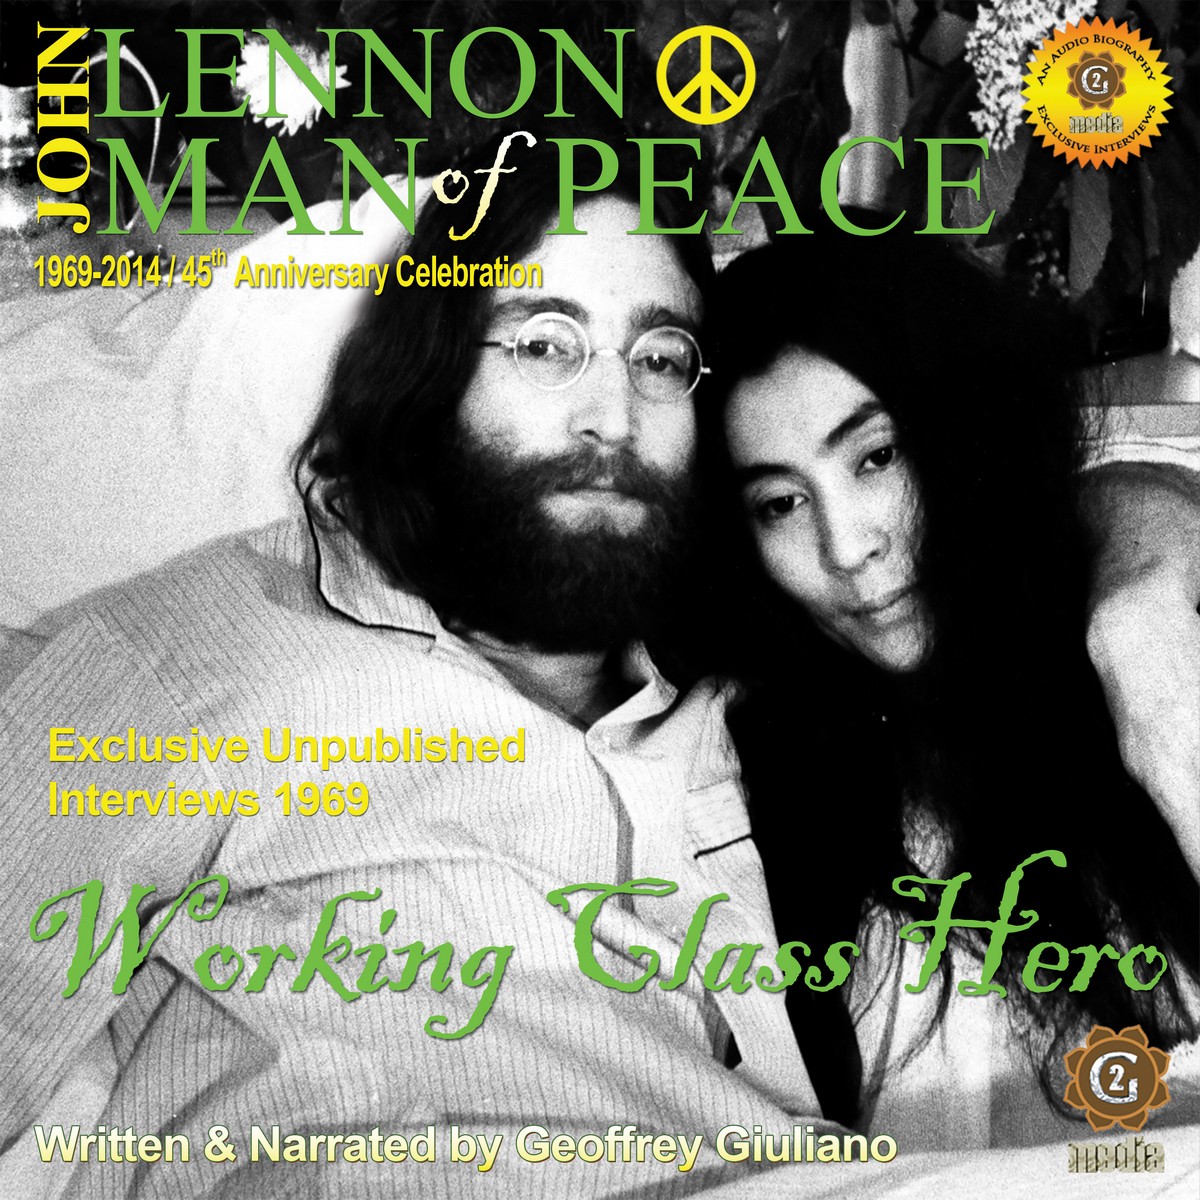 John Lennon Man of Peace, Part 2: Working Class Hero